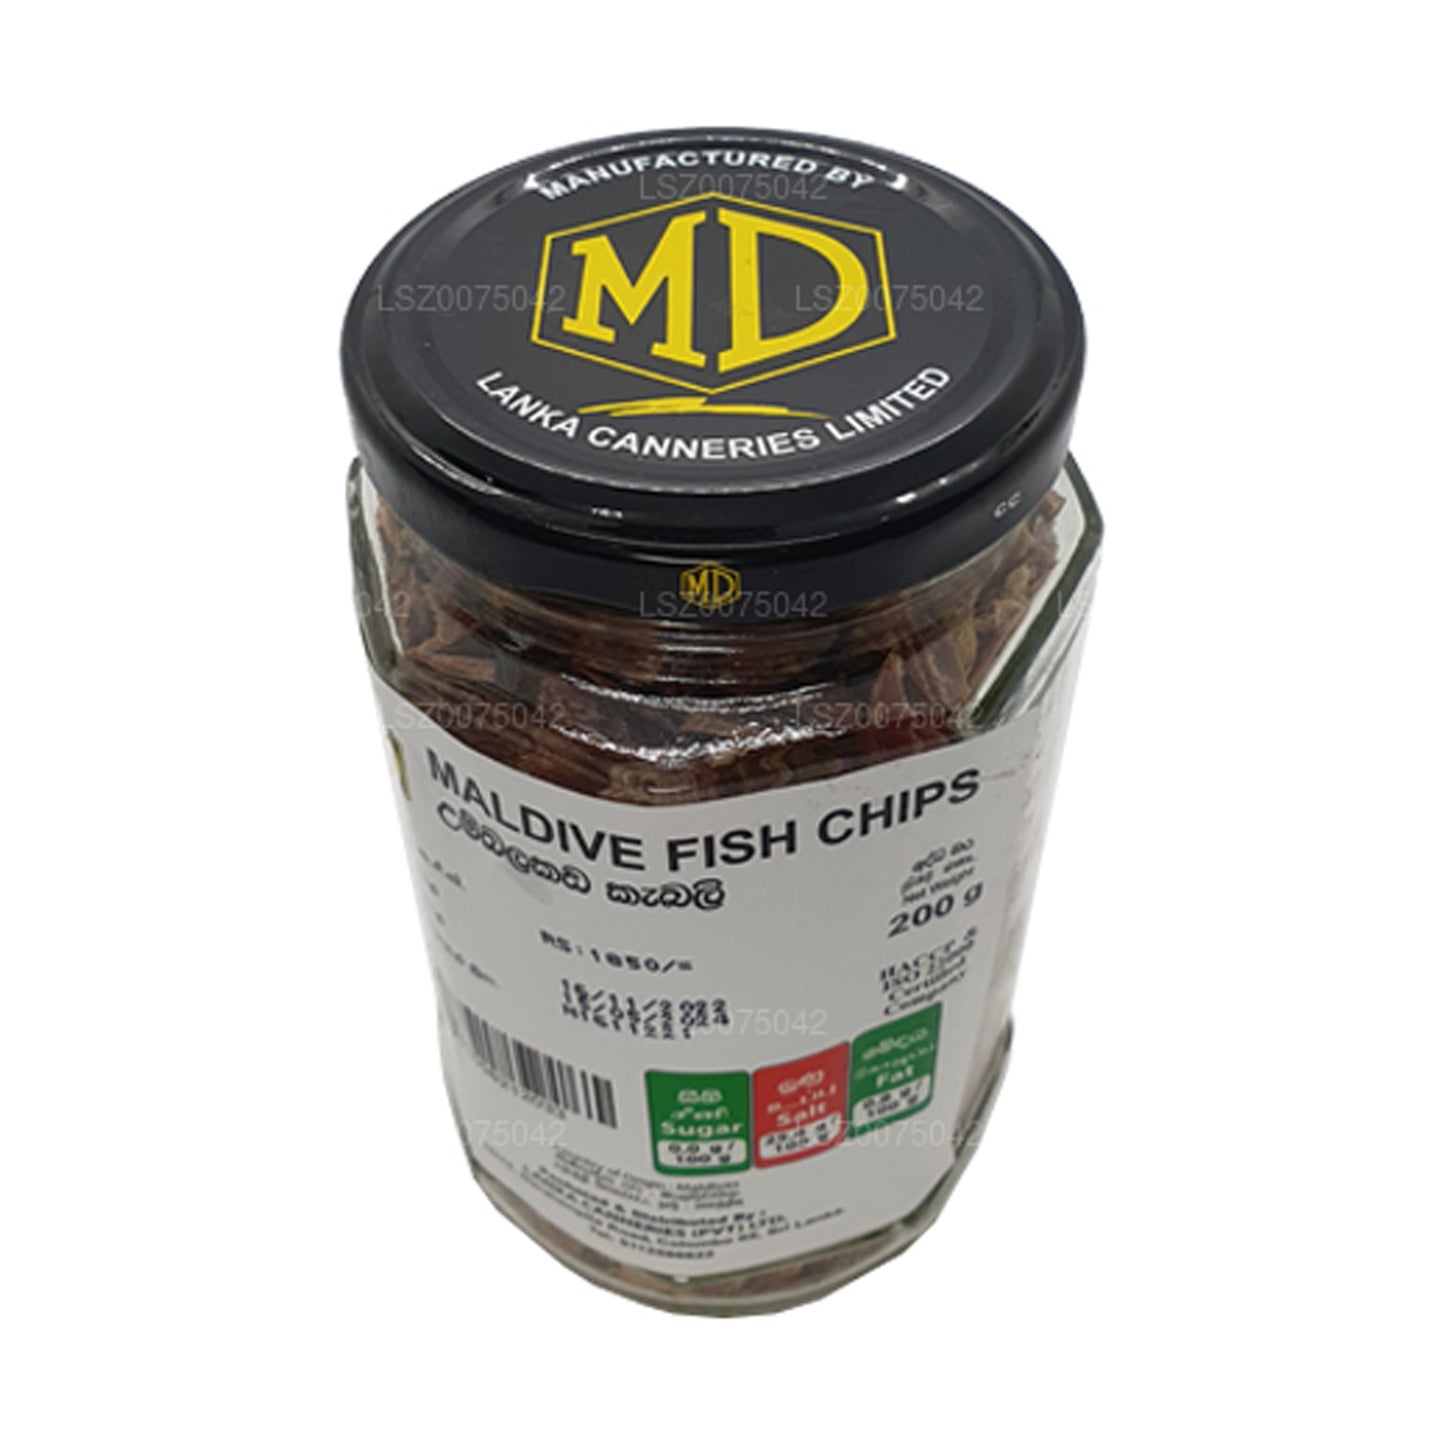 MD Maldive Fish Chips Flasche (200 g)